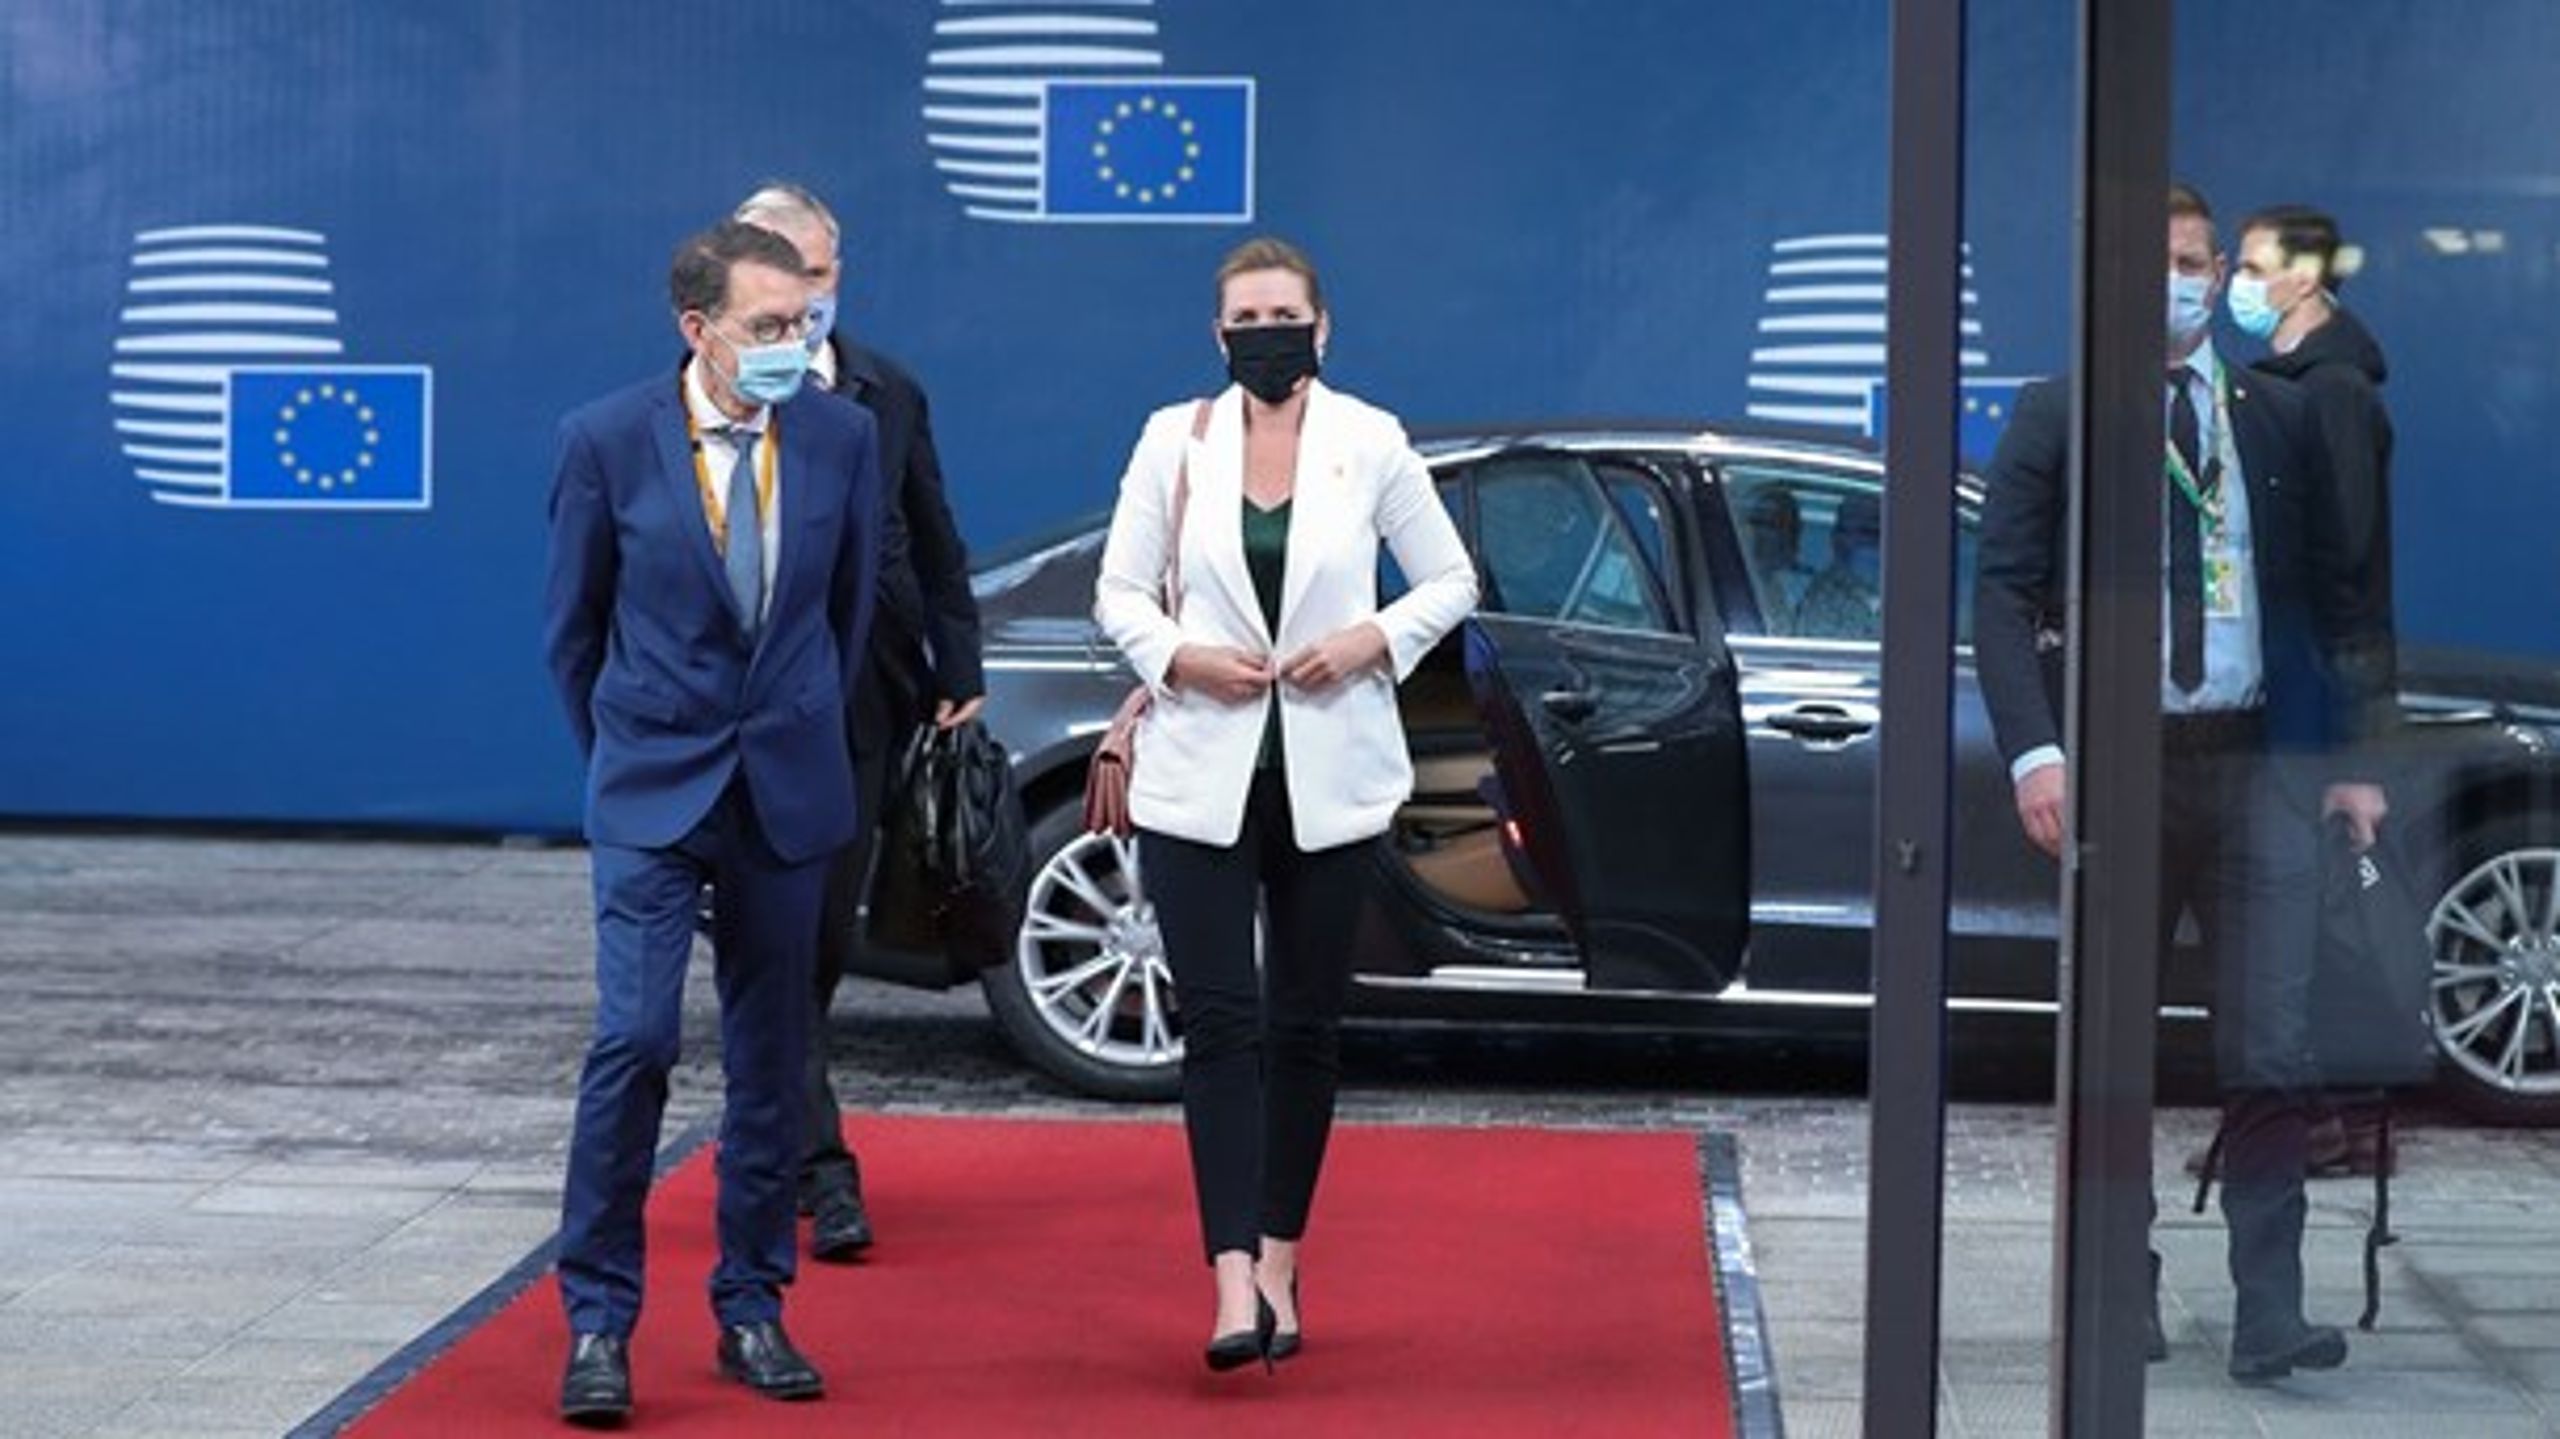 Statsminister Mette Frederiksen (S) og de andre europæiske ledere har været underlagt skrappe covid-regler under de seneste dages topmøde i Bruxelles.